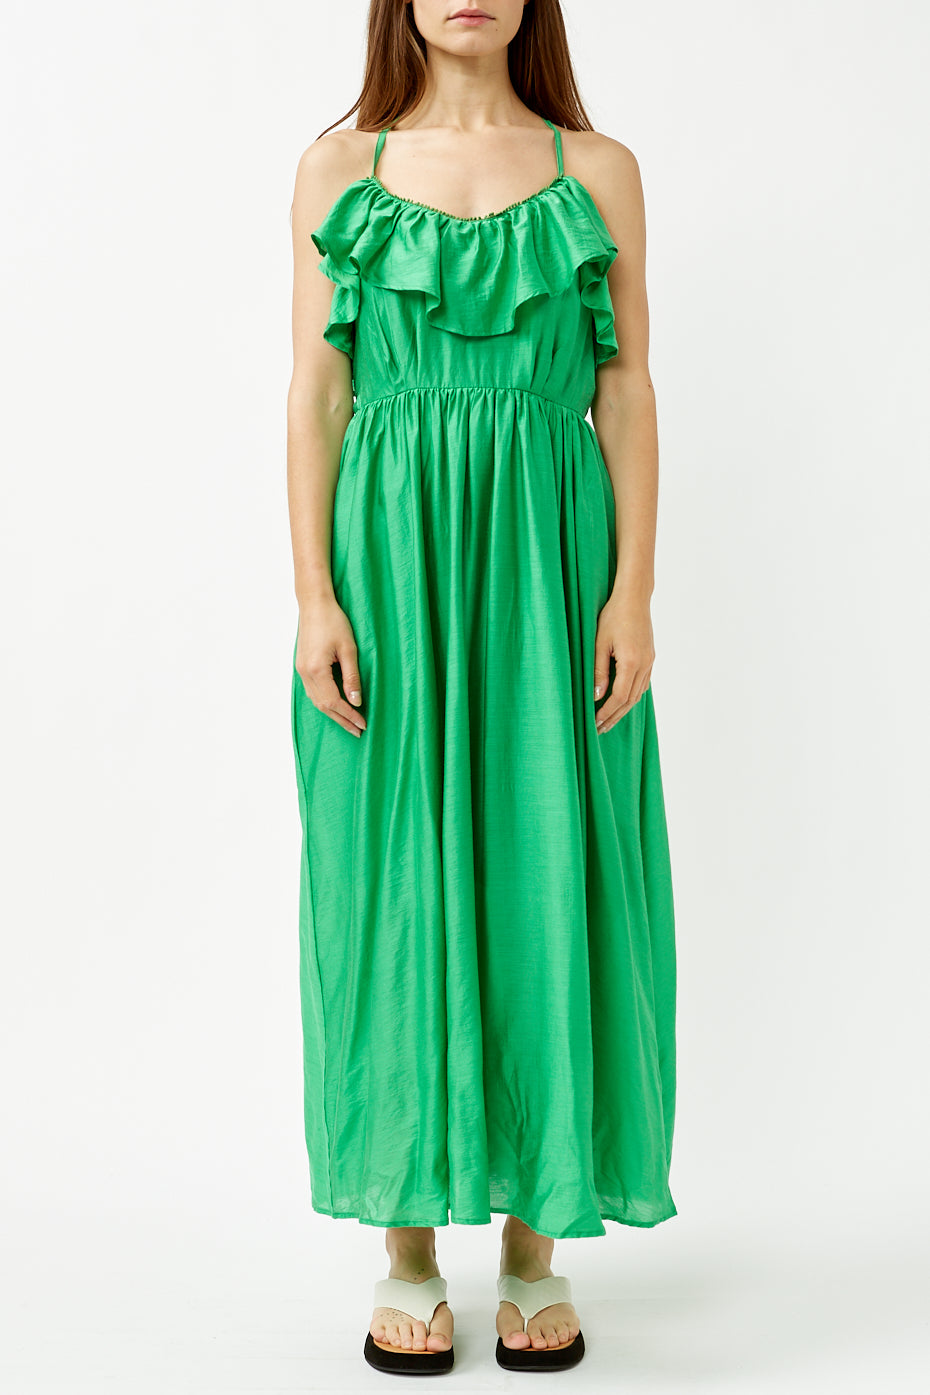 Louizon Green Iftar Dress